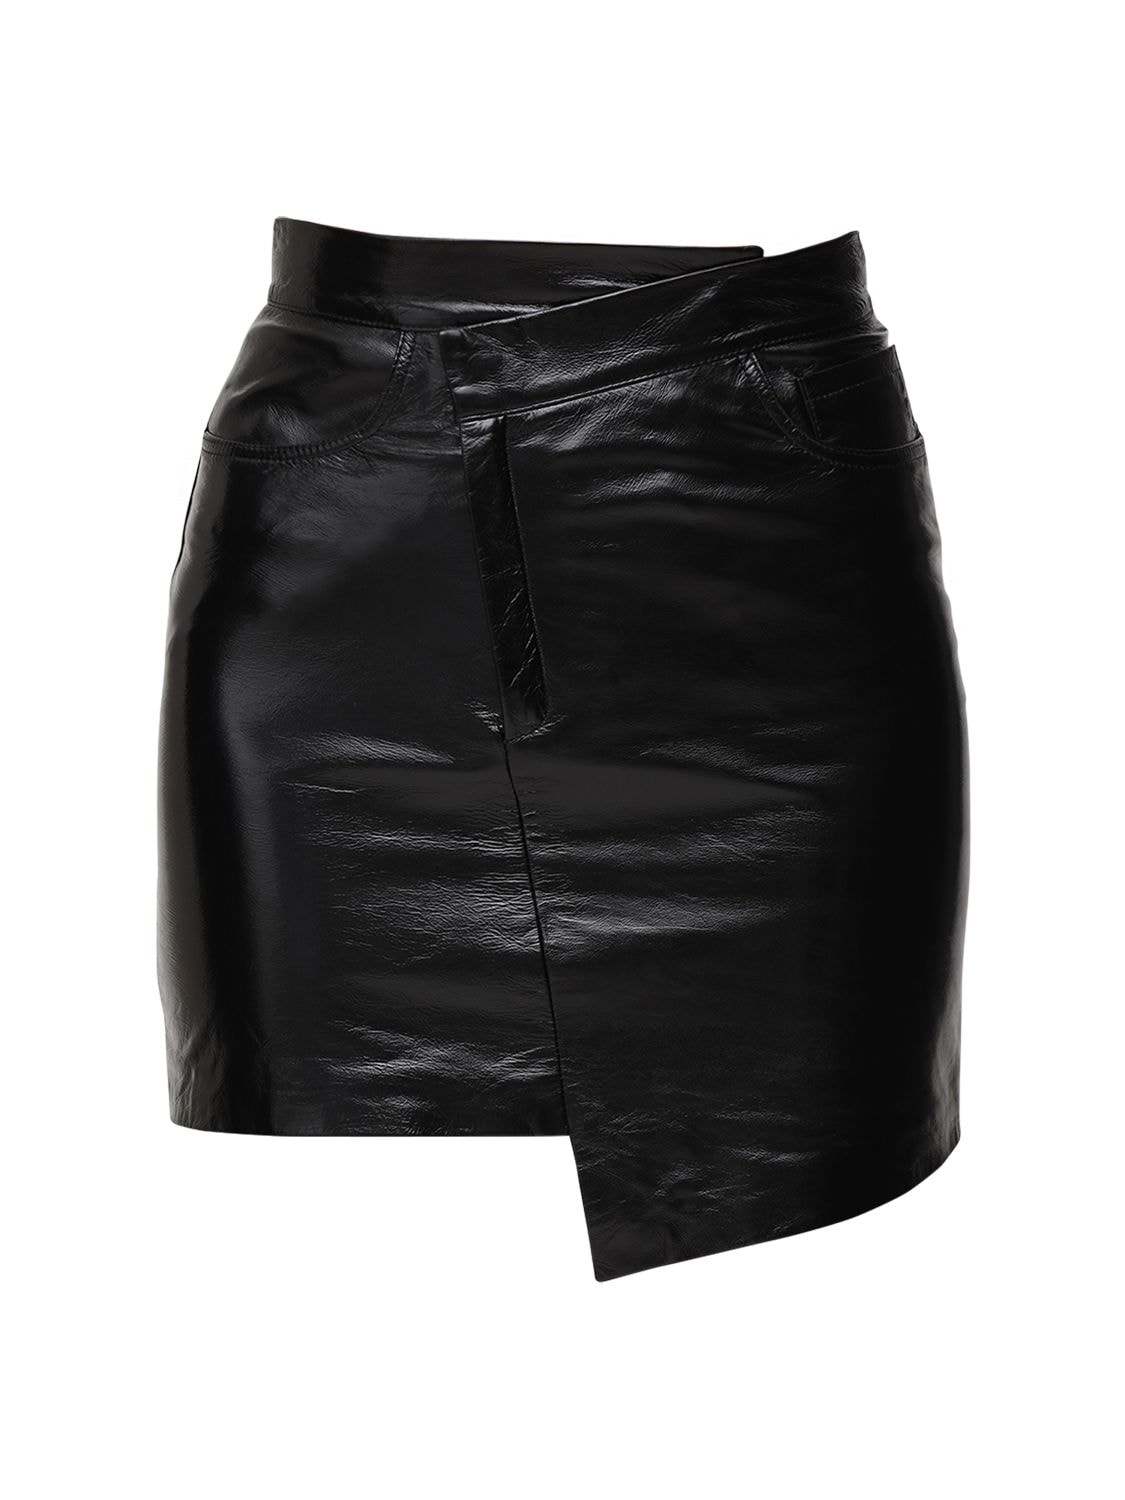 white patent leather mini skirt